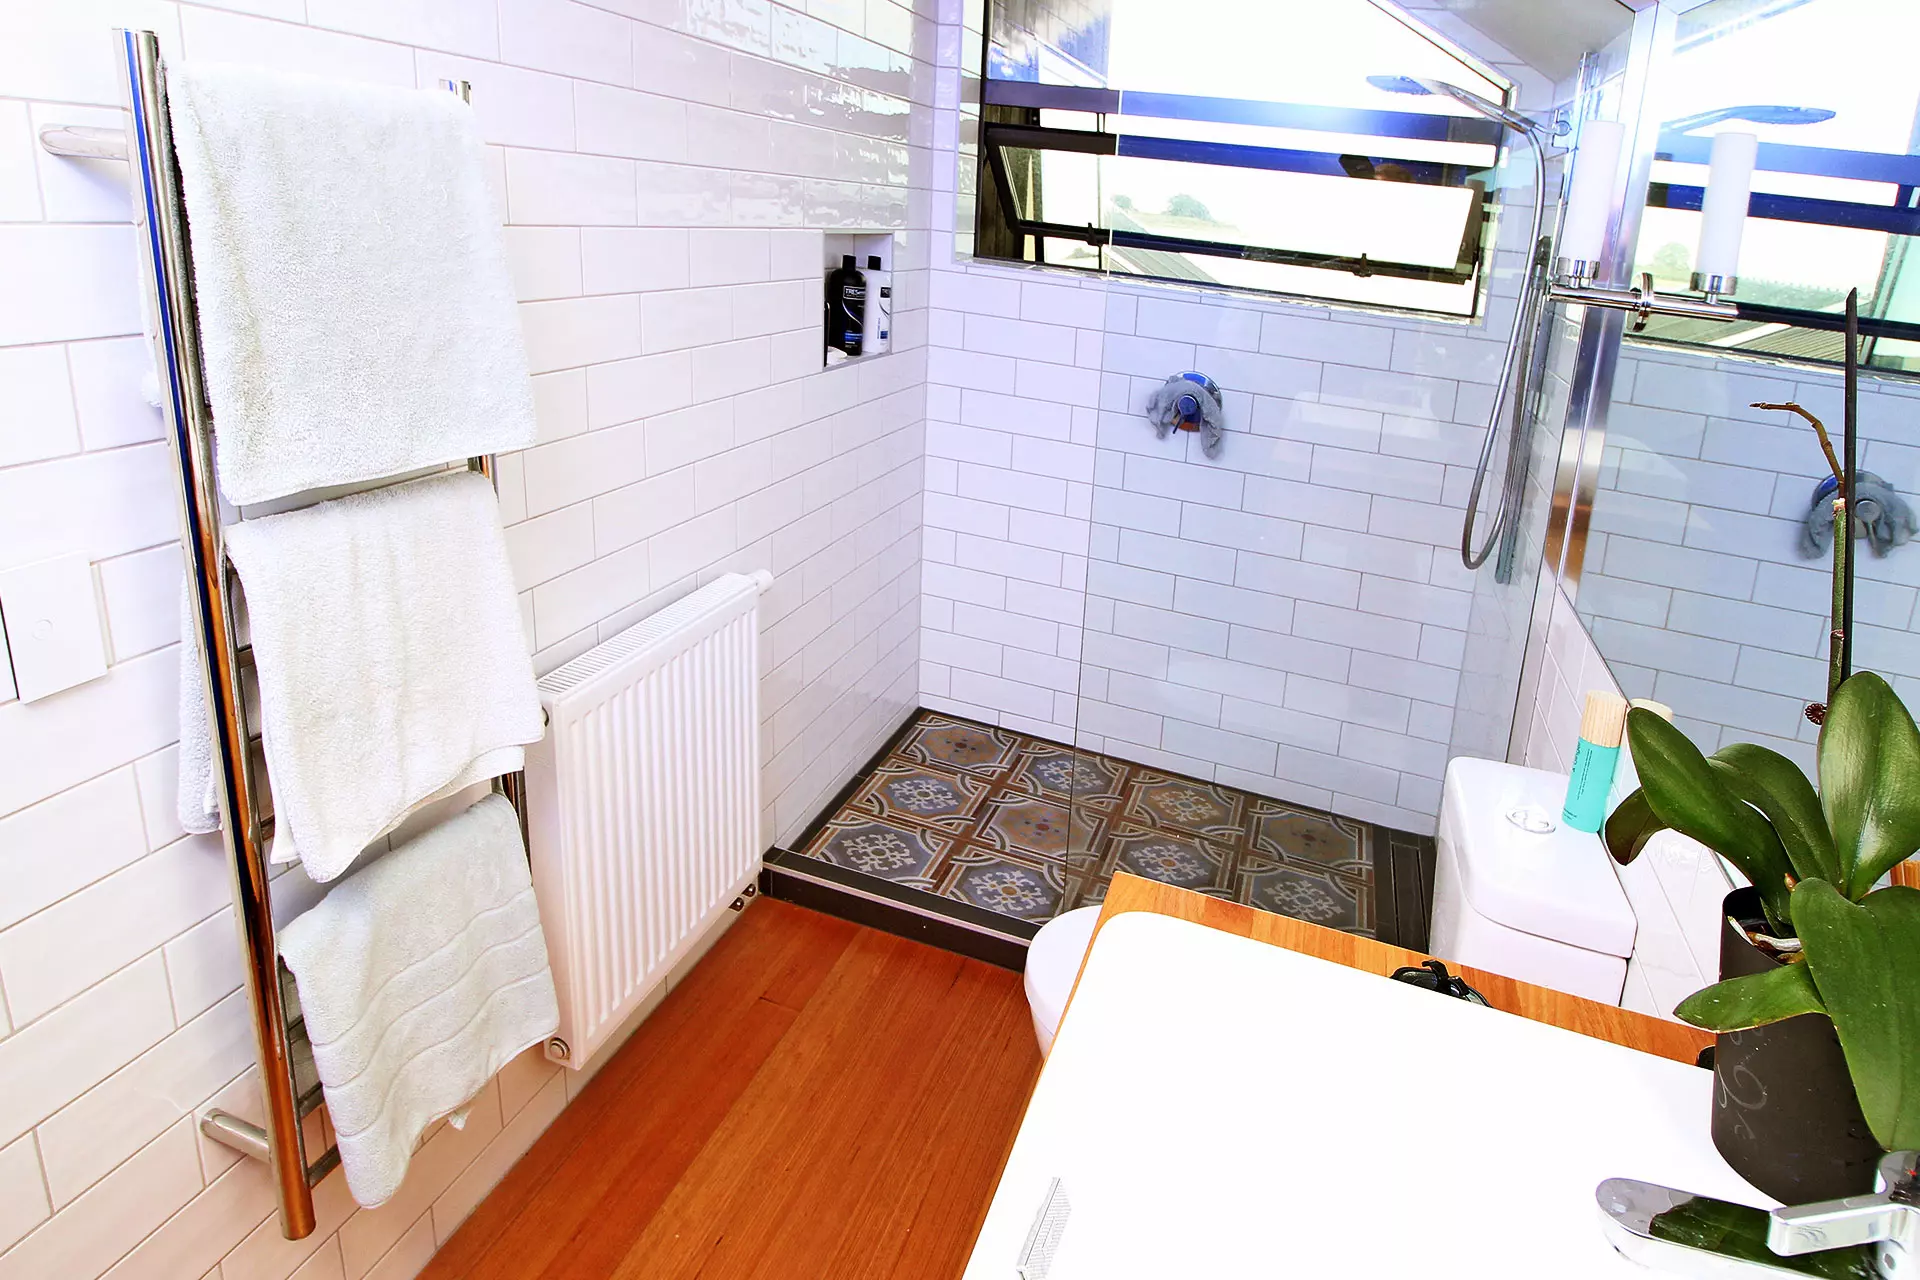 Heating Modern Architectural Build Radiators in Bath Room 2